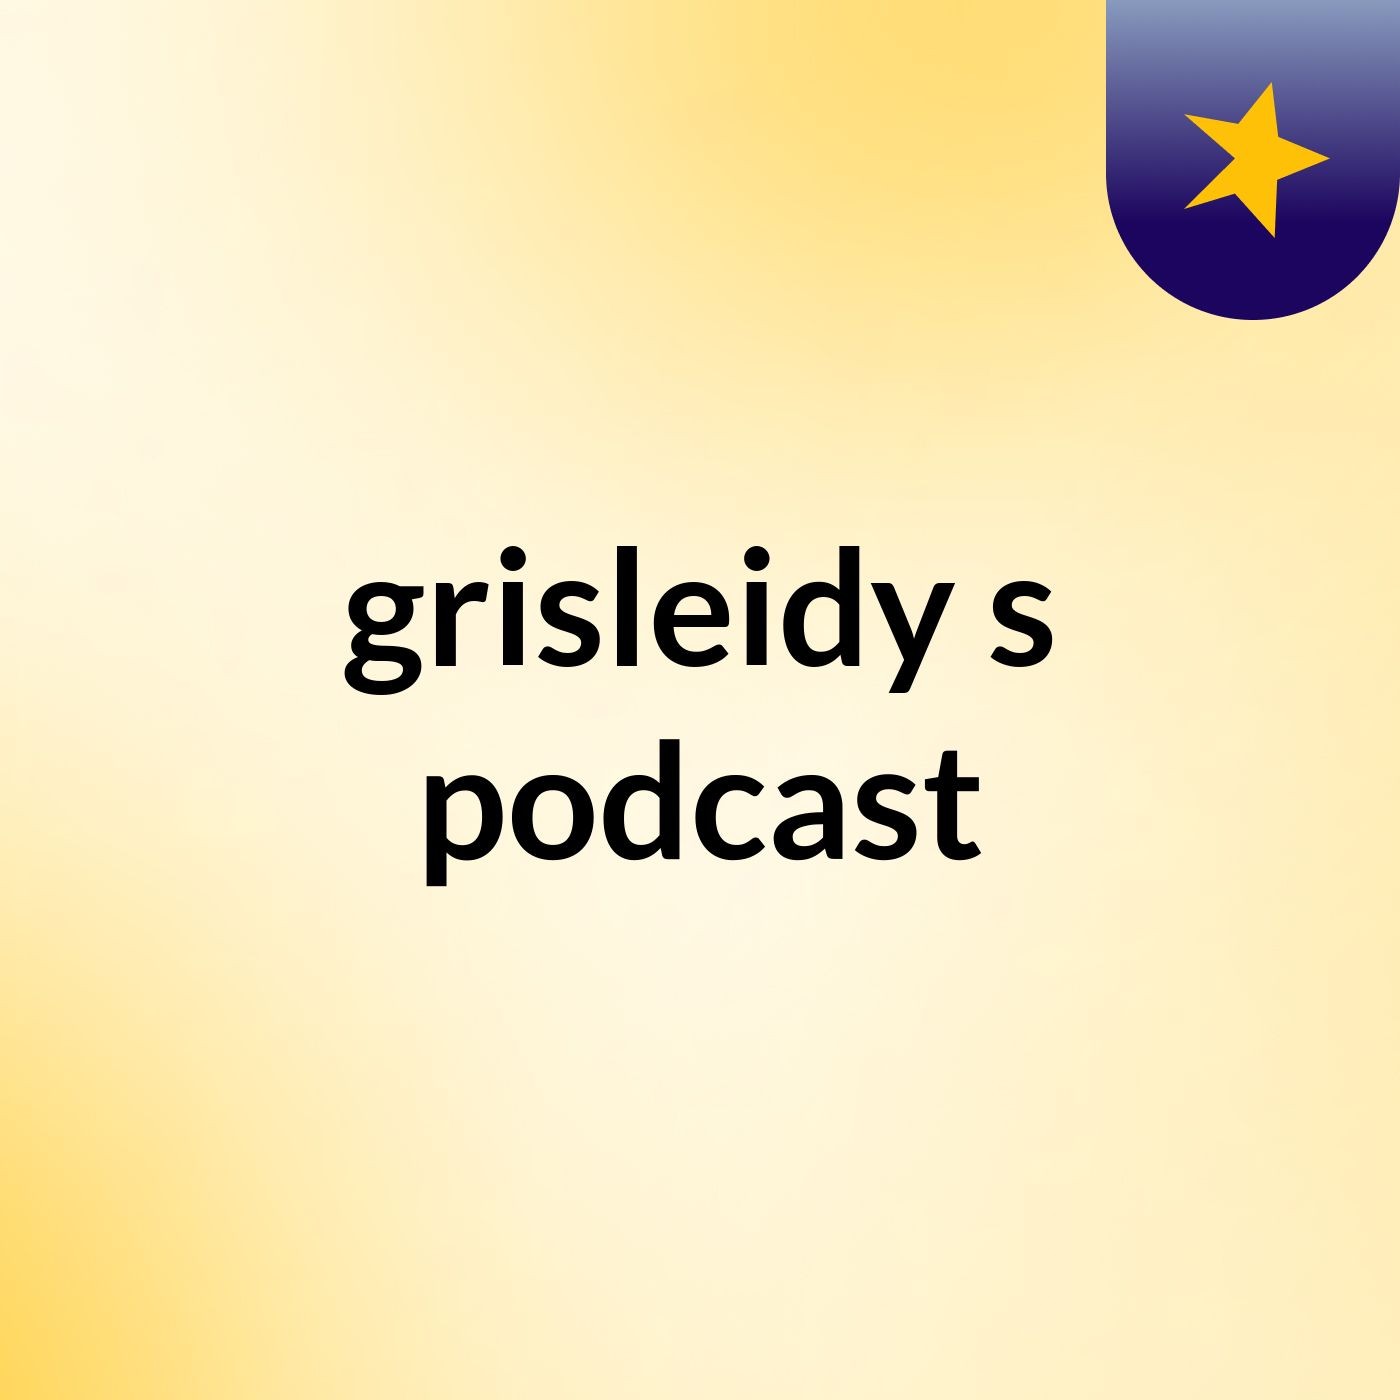 grisleidy's podcast